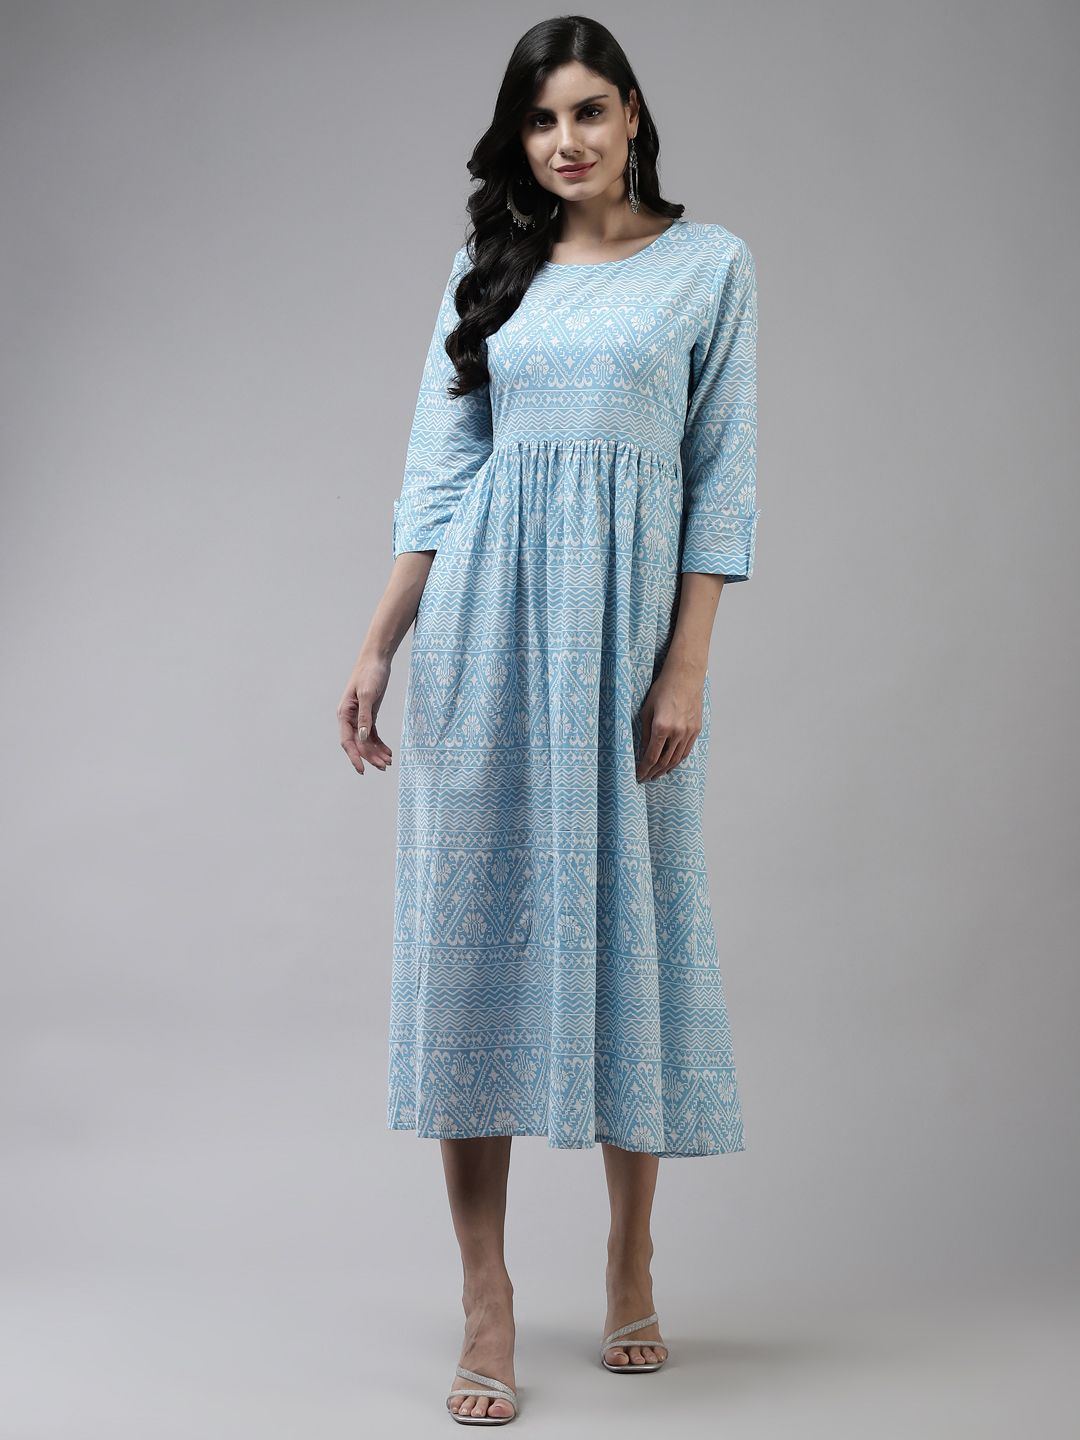 Yufta Blue & White Ethnic Motifs Cotton Ethnic Midi Dress Price in India